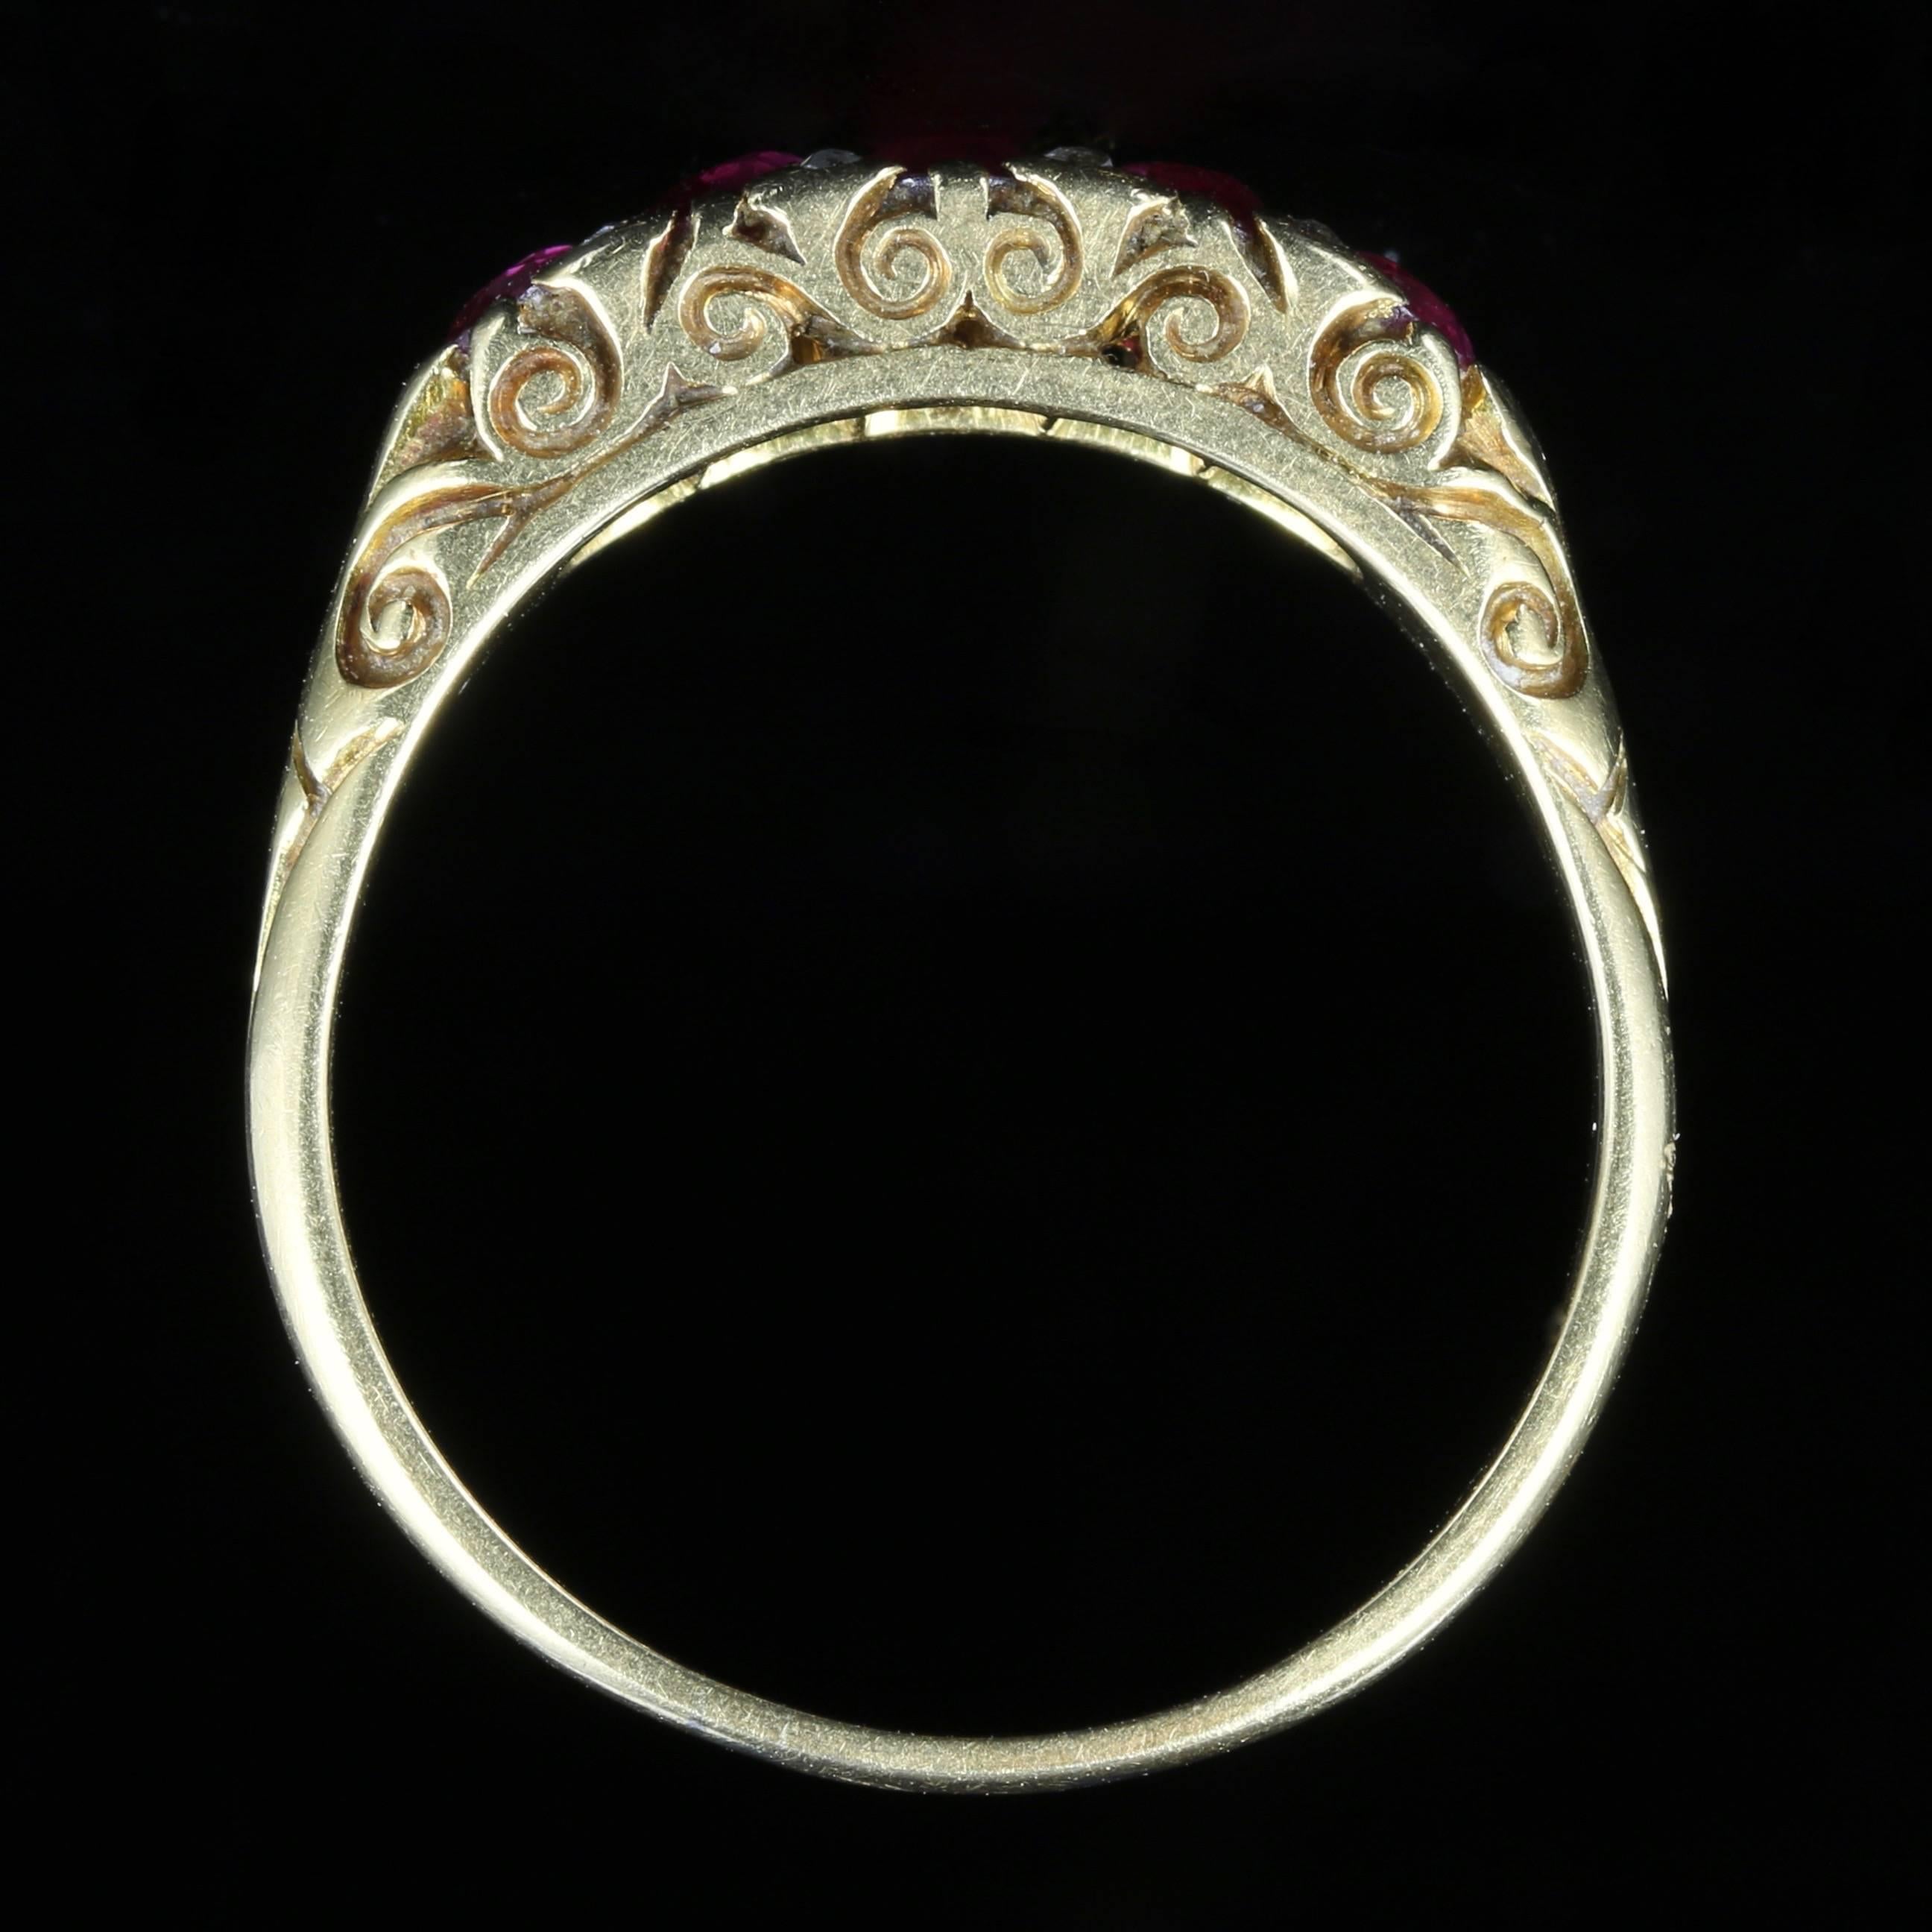 Antique Victorian Burmese Ruby Diamond Ring, 18 Carat Gold, Certified 2